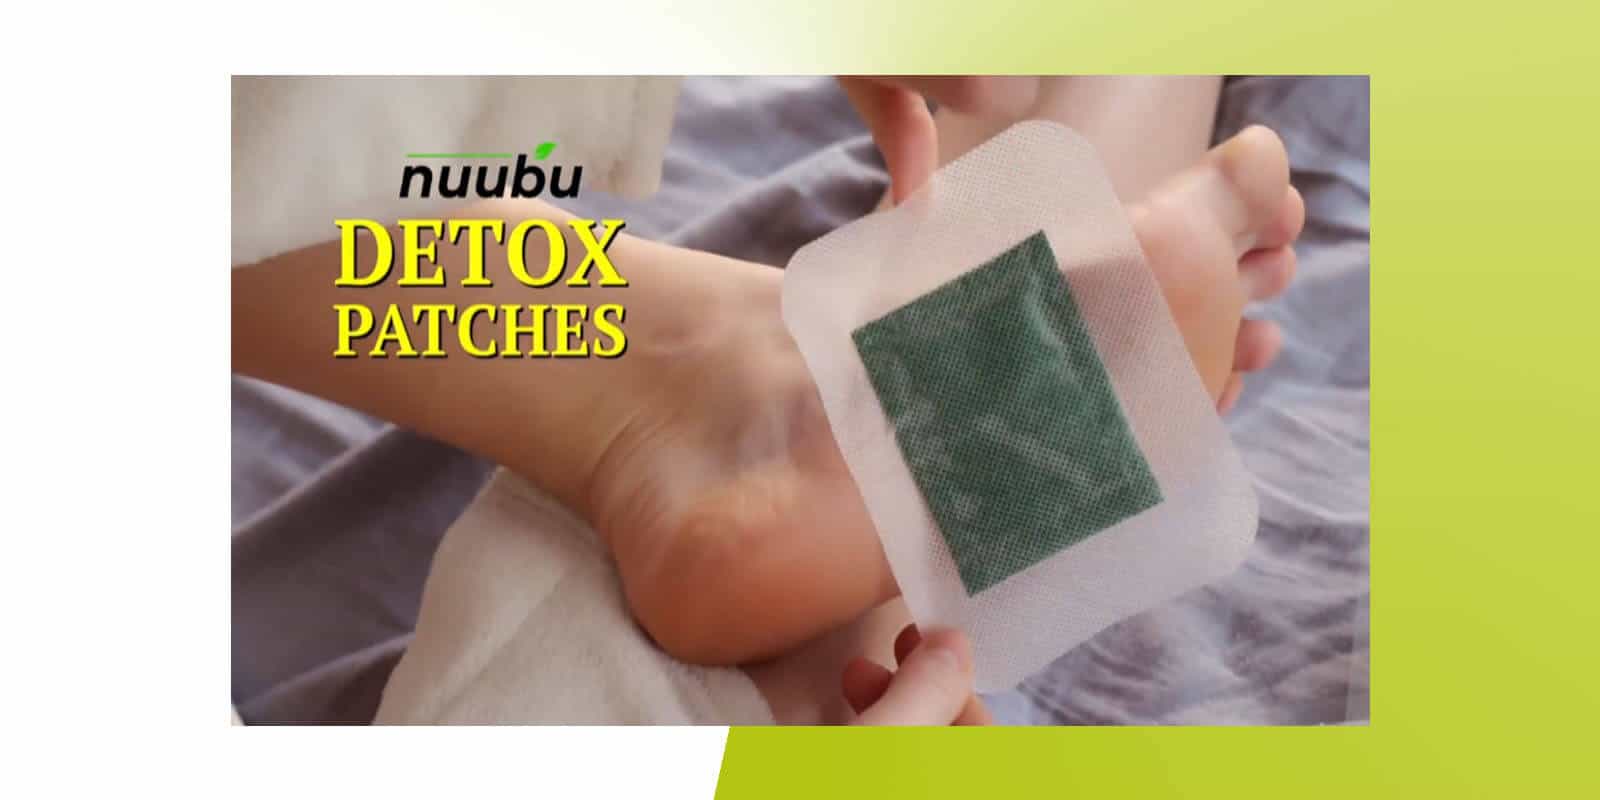 Nuubu Detox Patches